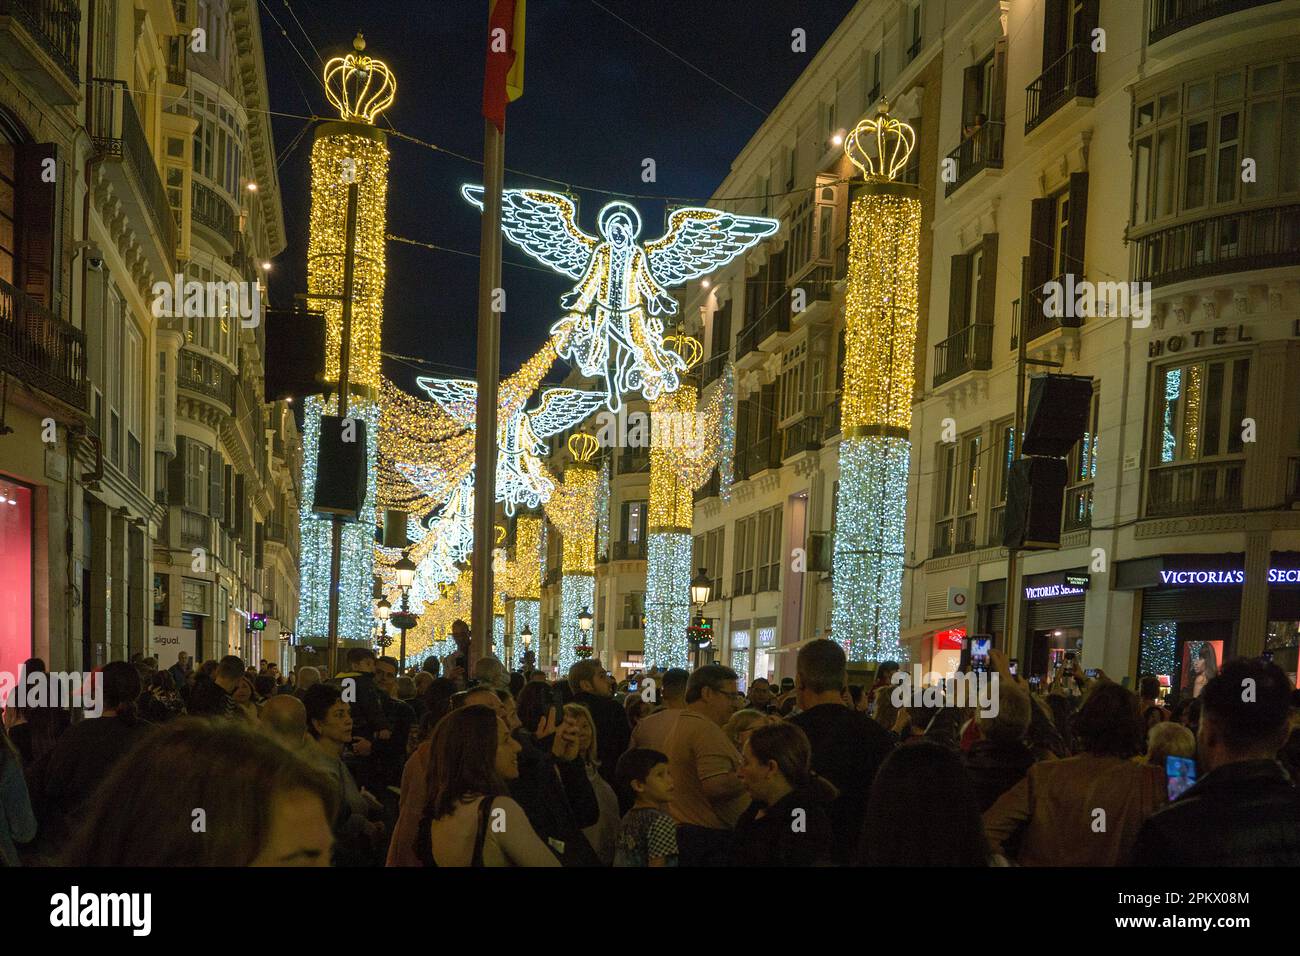 Lumières de Noël dans la Calle marques de Larios, Malaga, Andalousie, Costa del sol, Espagne, Europe Banque D'Images